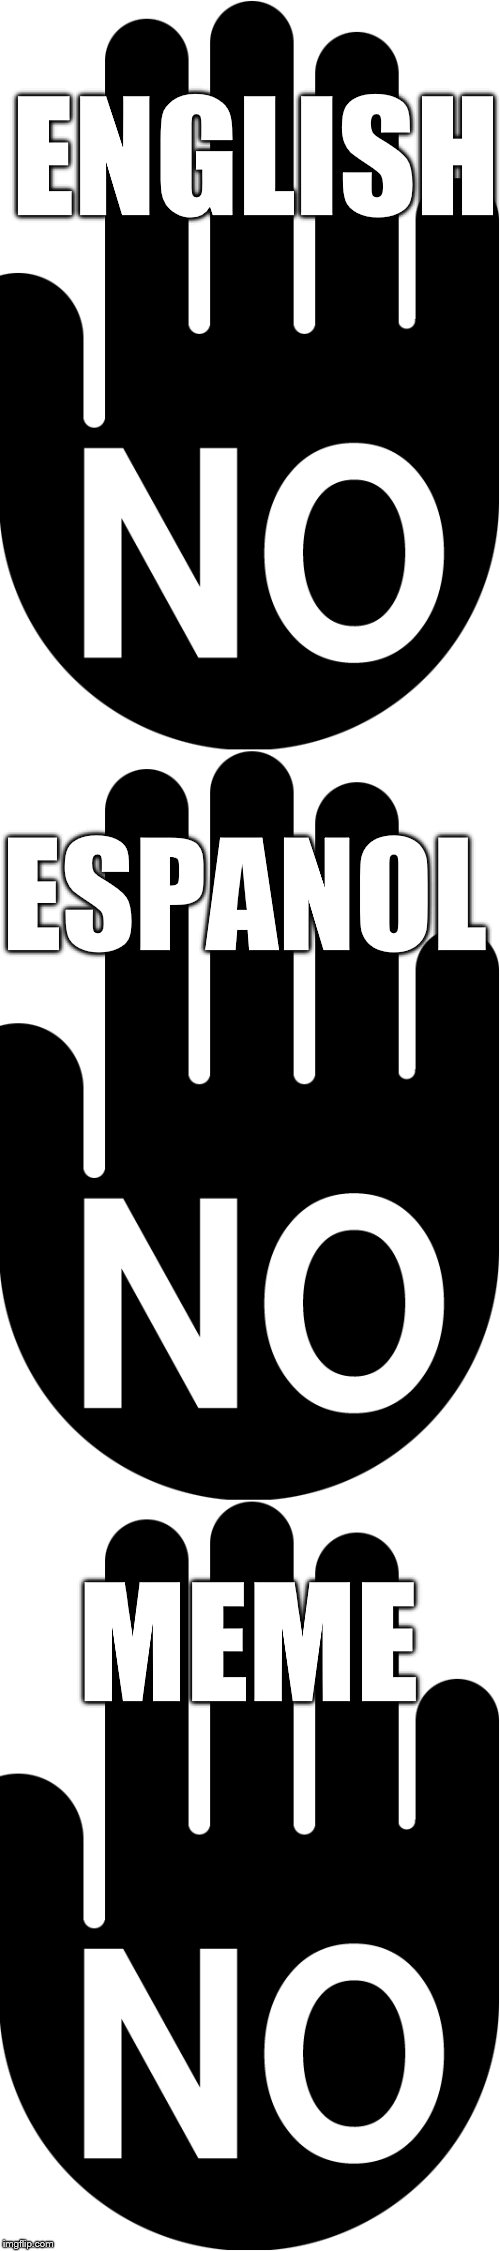 Trilingual | ENGLISH; ESPANOL; MEME | image tagged in no | made w/ Imgflip meme maker